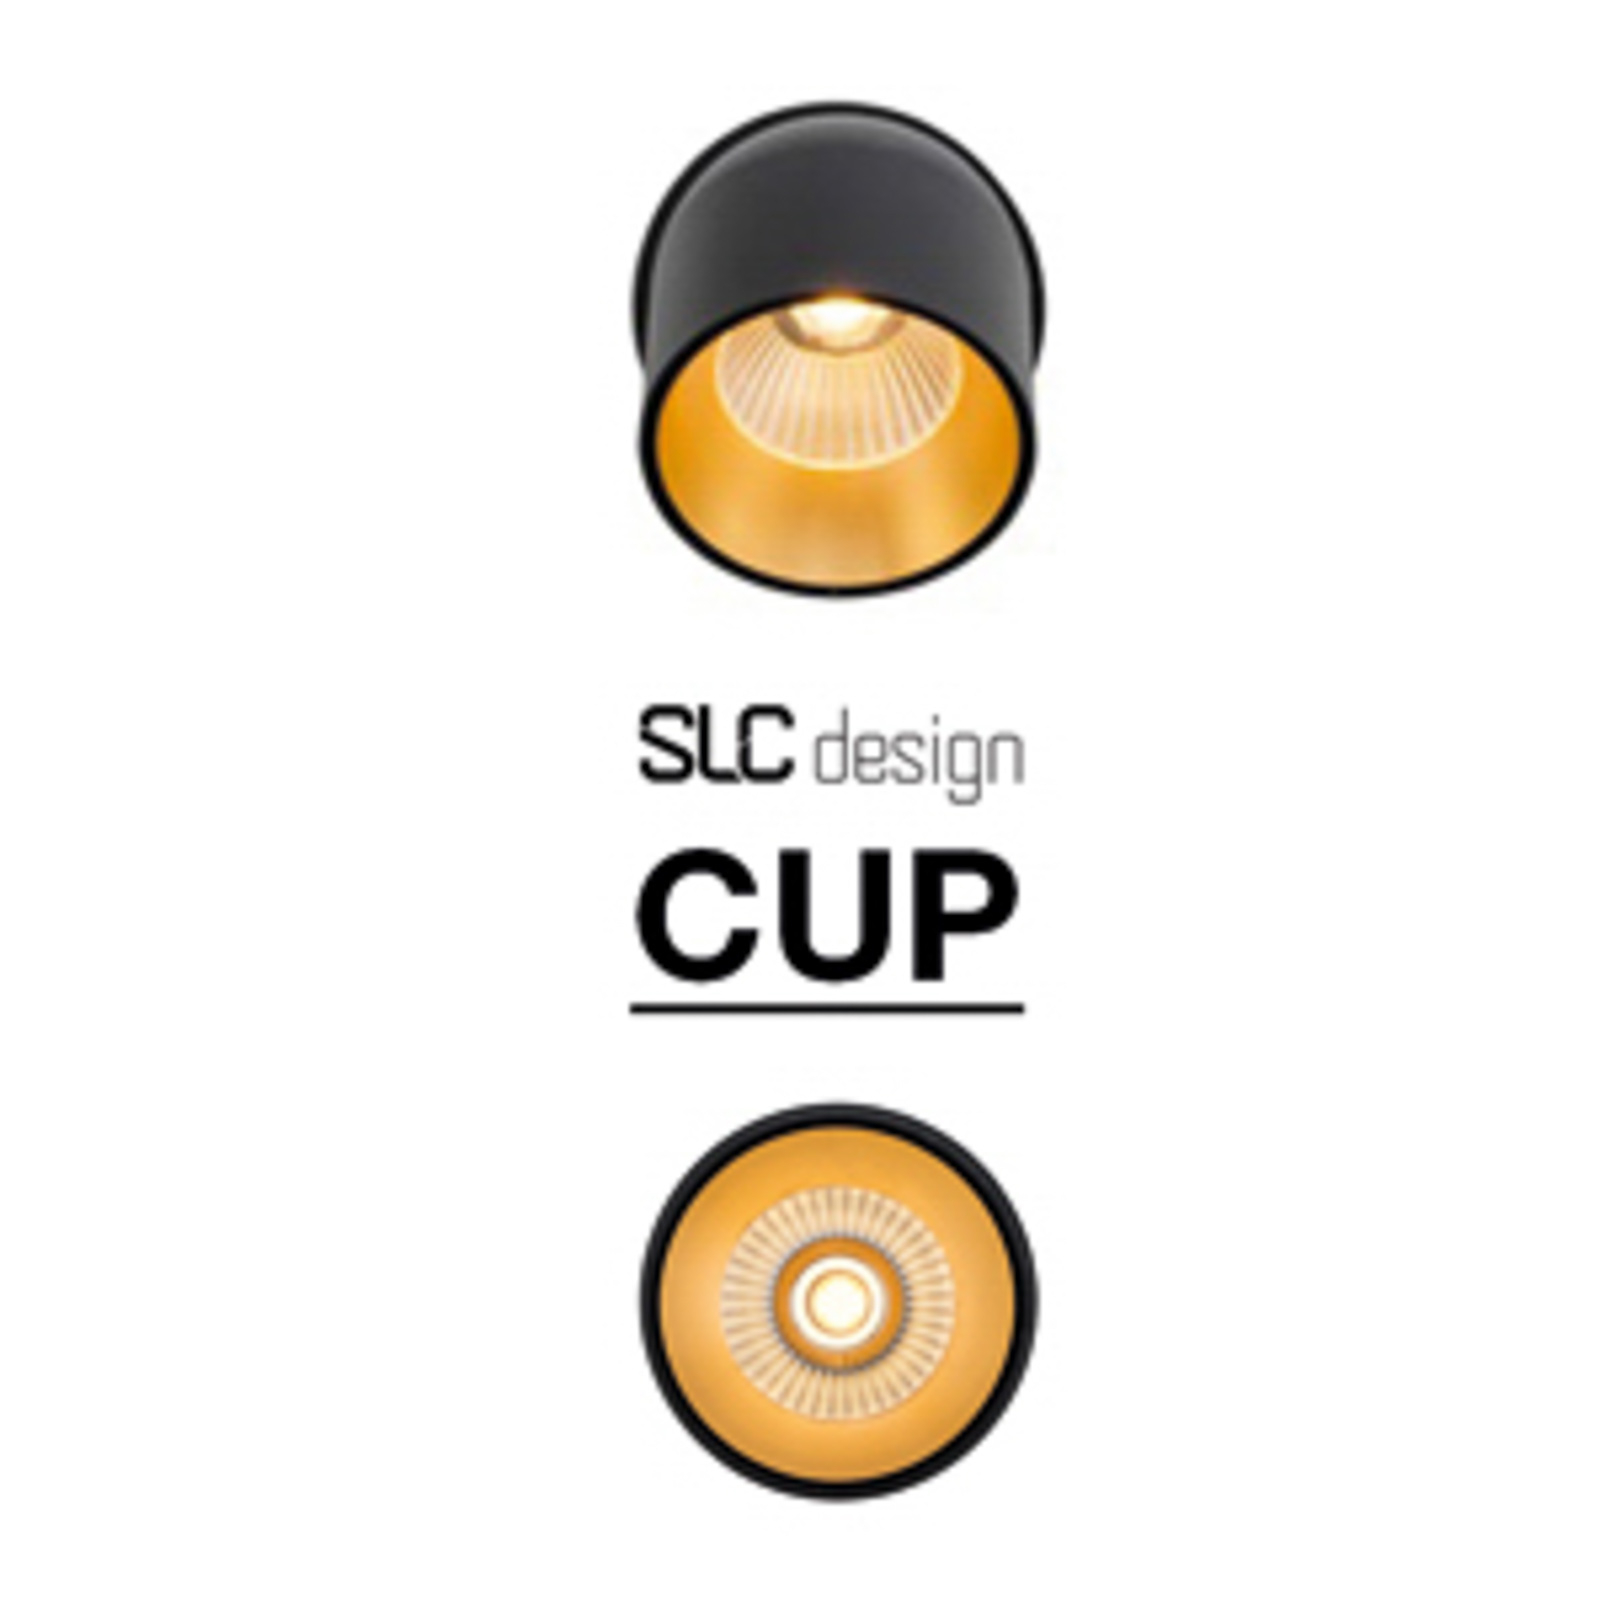 SLC Cup zapustené LED downlight čierna/zlatá 3000K